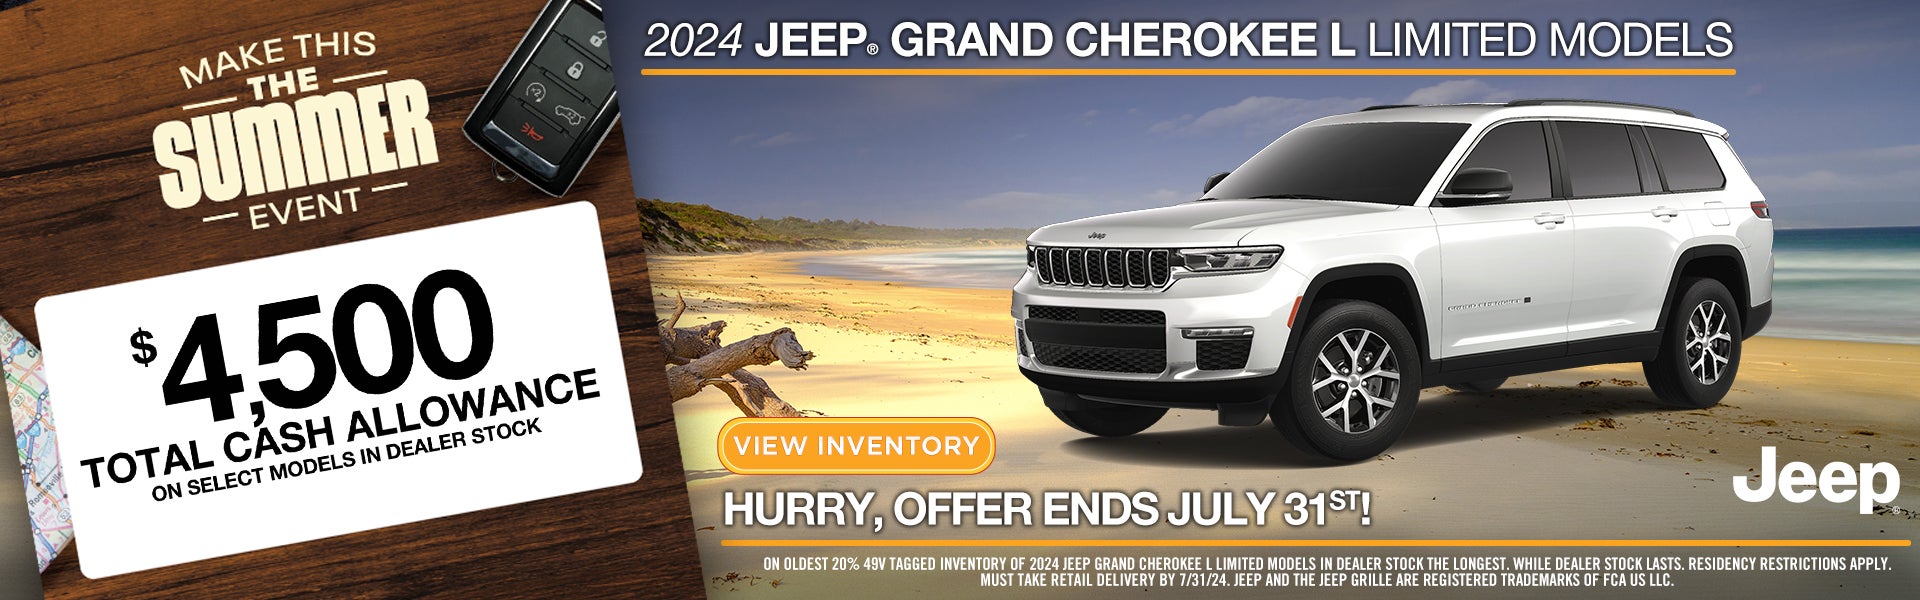 2024 Jeep Grand Cherokee L Limited Models